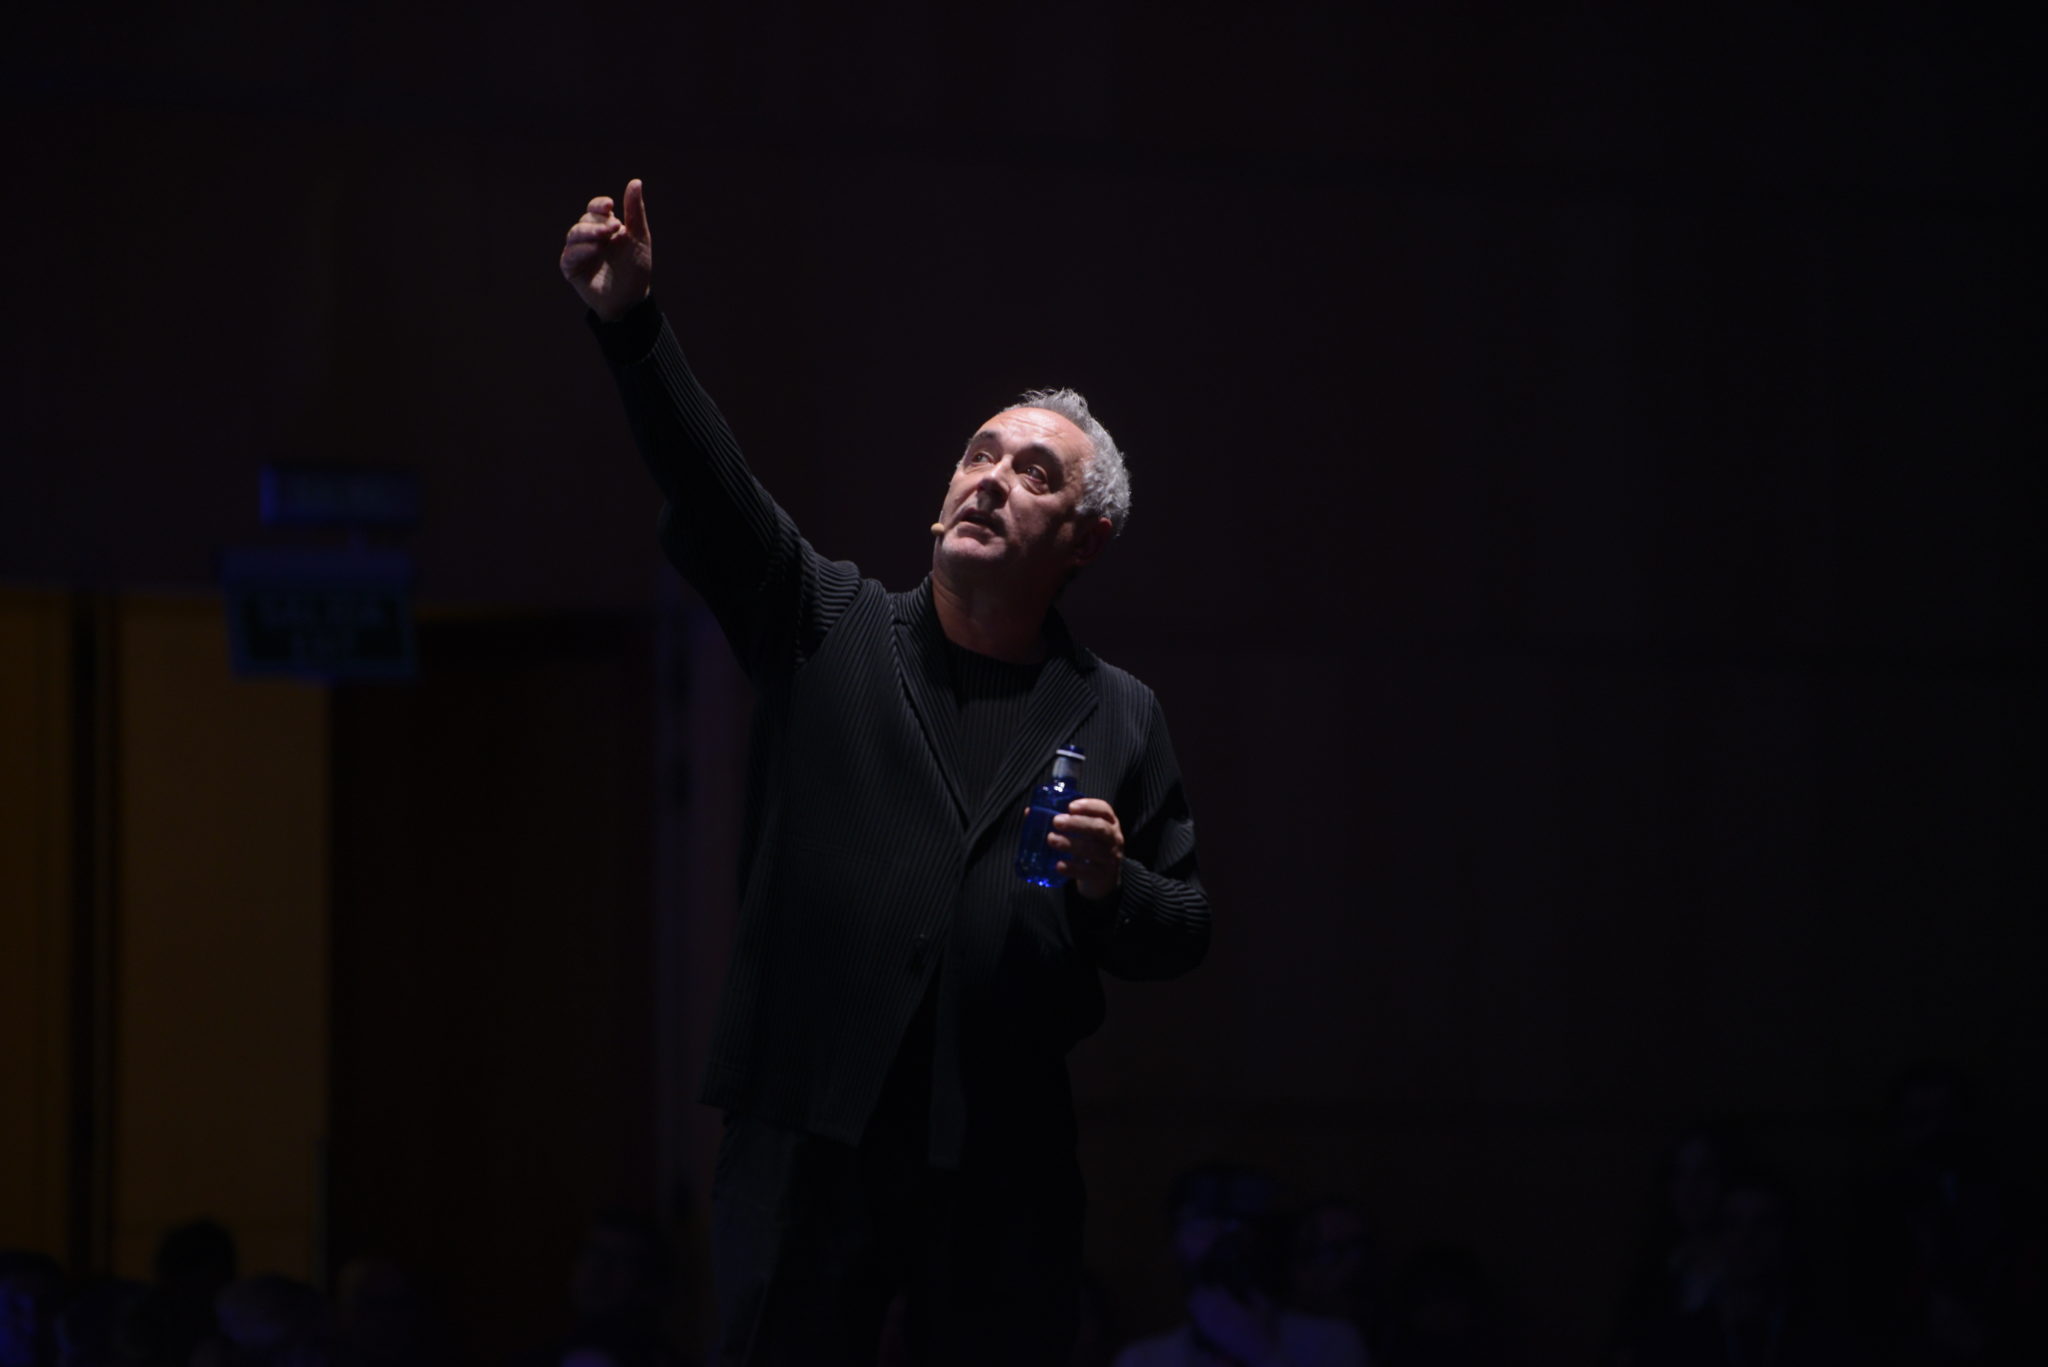 Ferrán Adrià of elBulli fame presenting at the 2019 Madrid Fusión